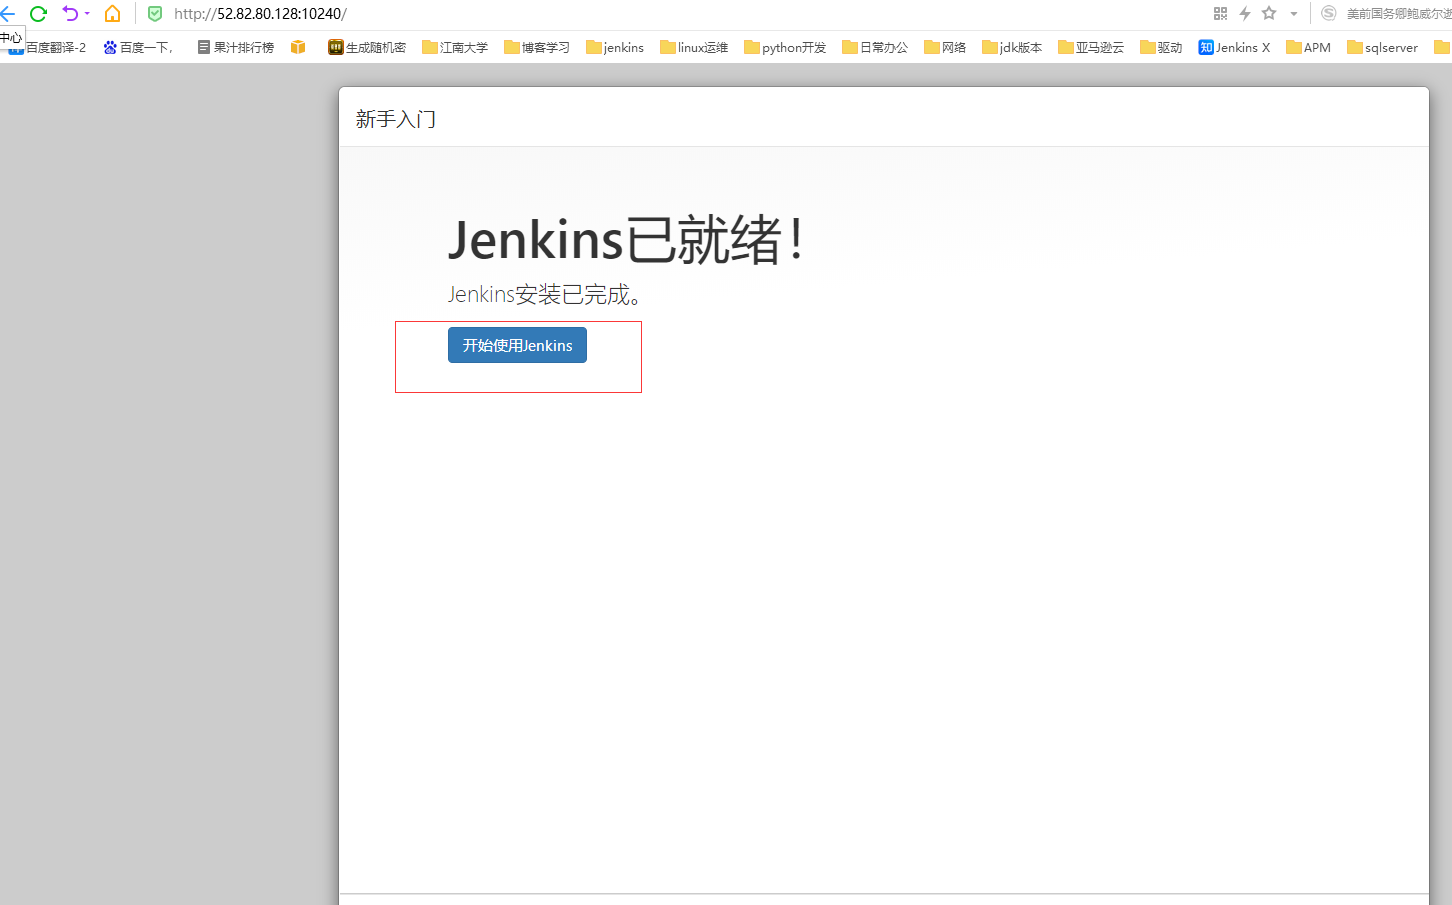 Docker安装Jenkins-2.249.3-1.1的过程是什么